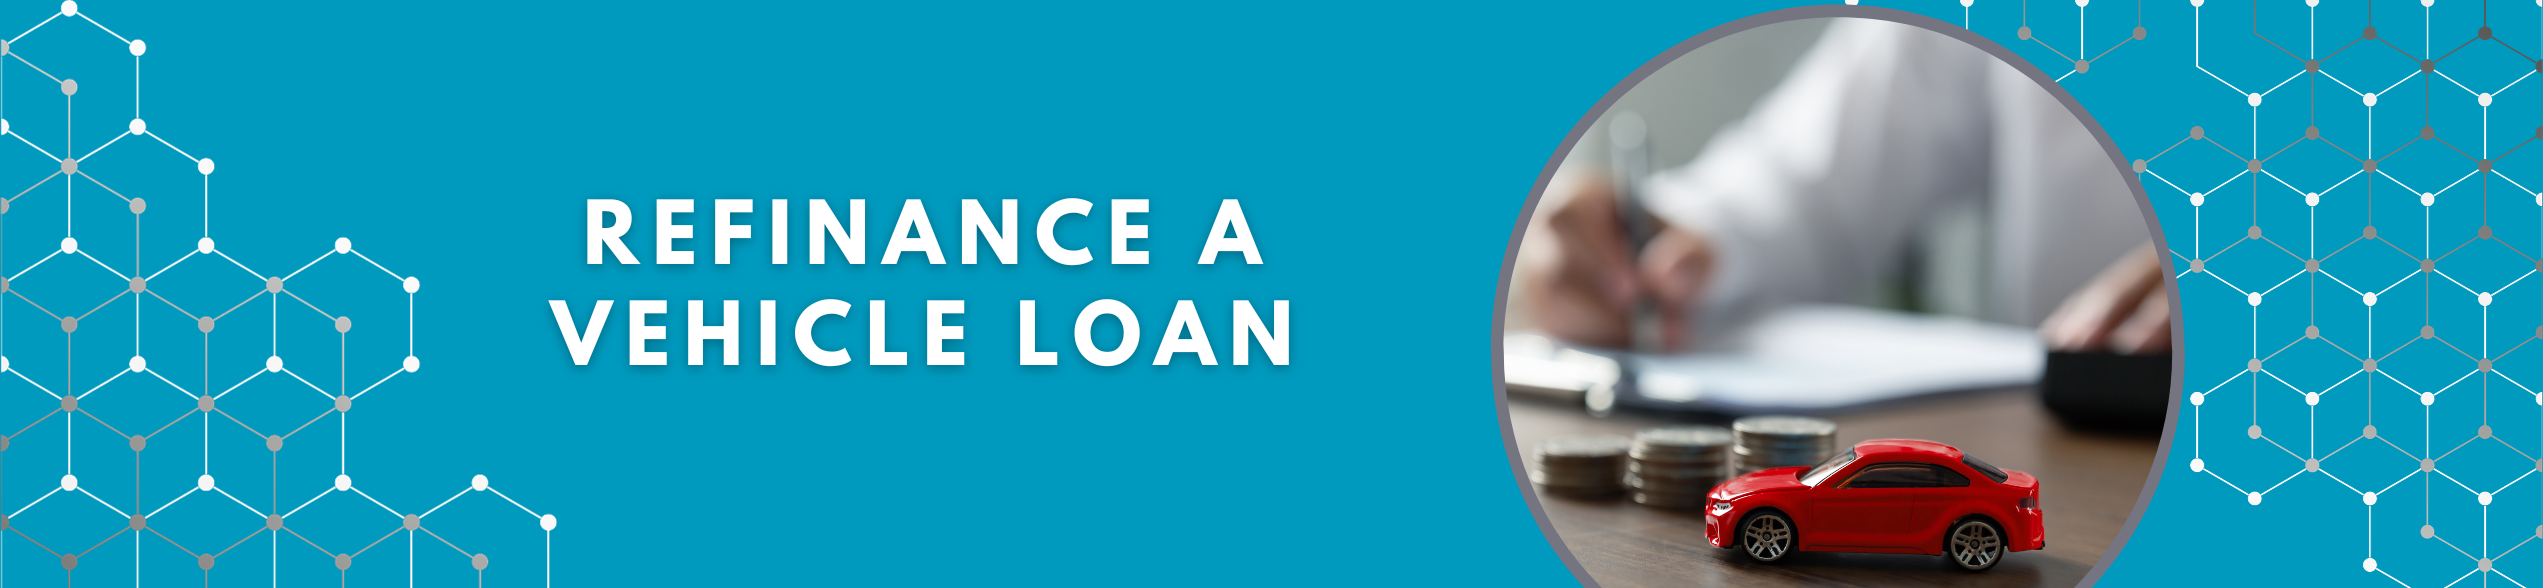 Refinance a Vehicle Loan with CAFCU